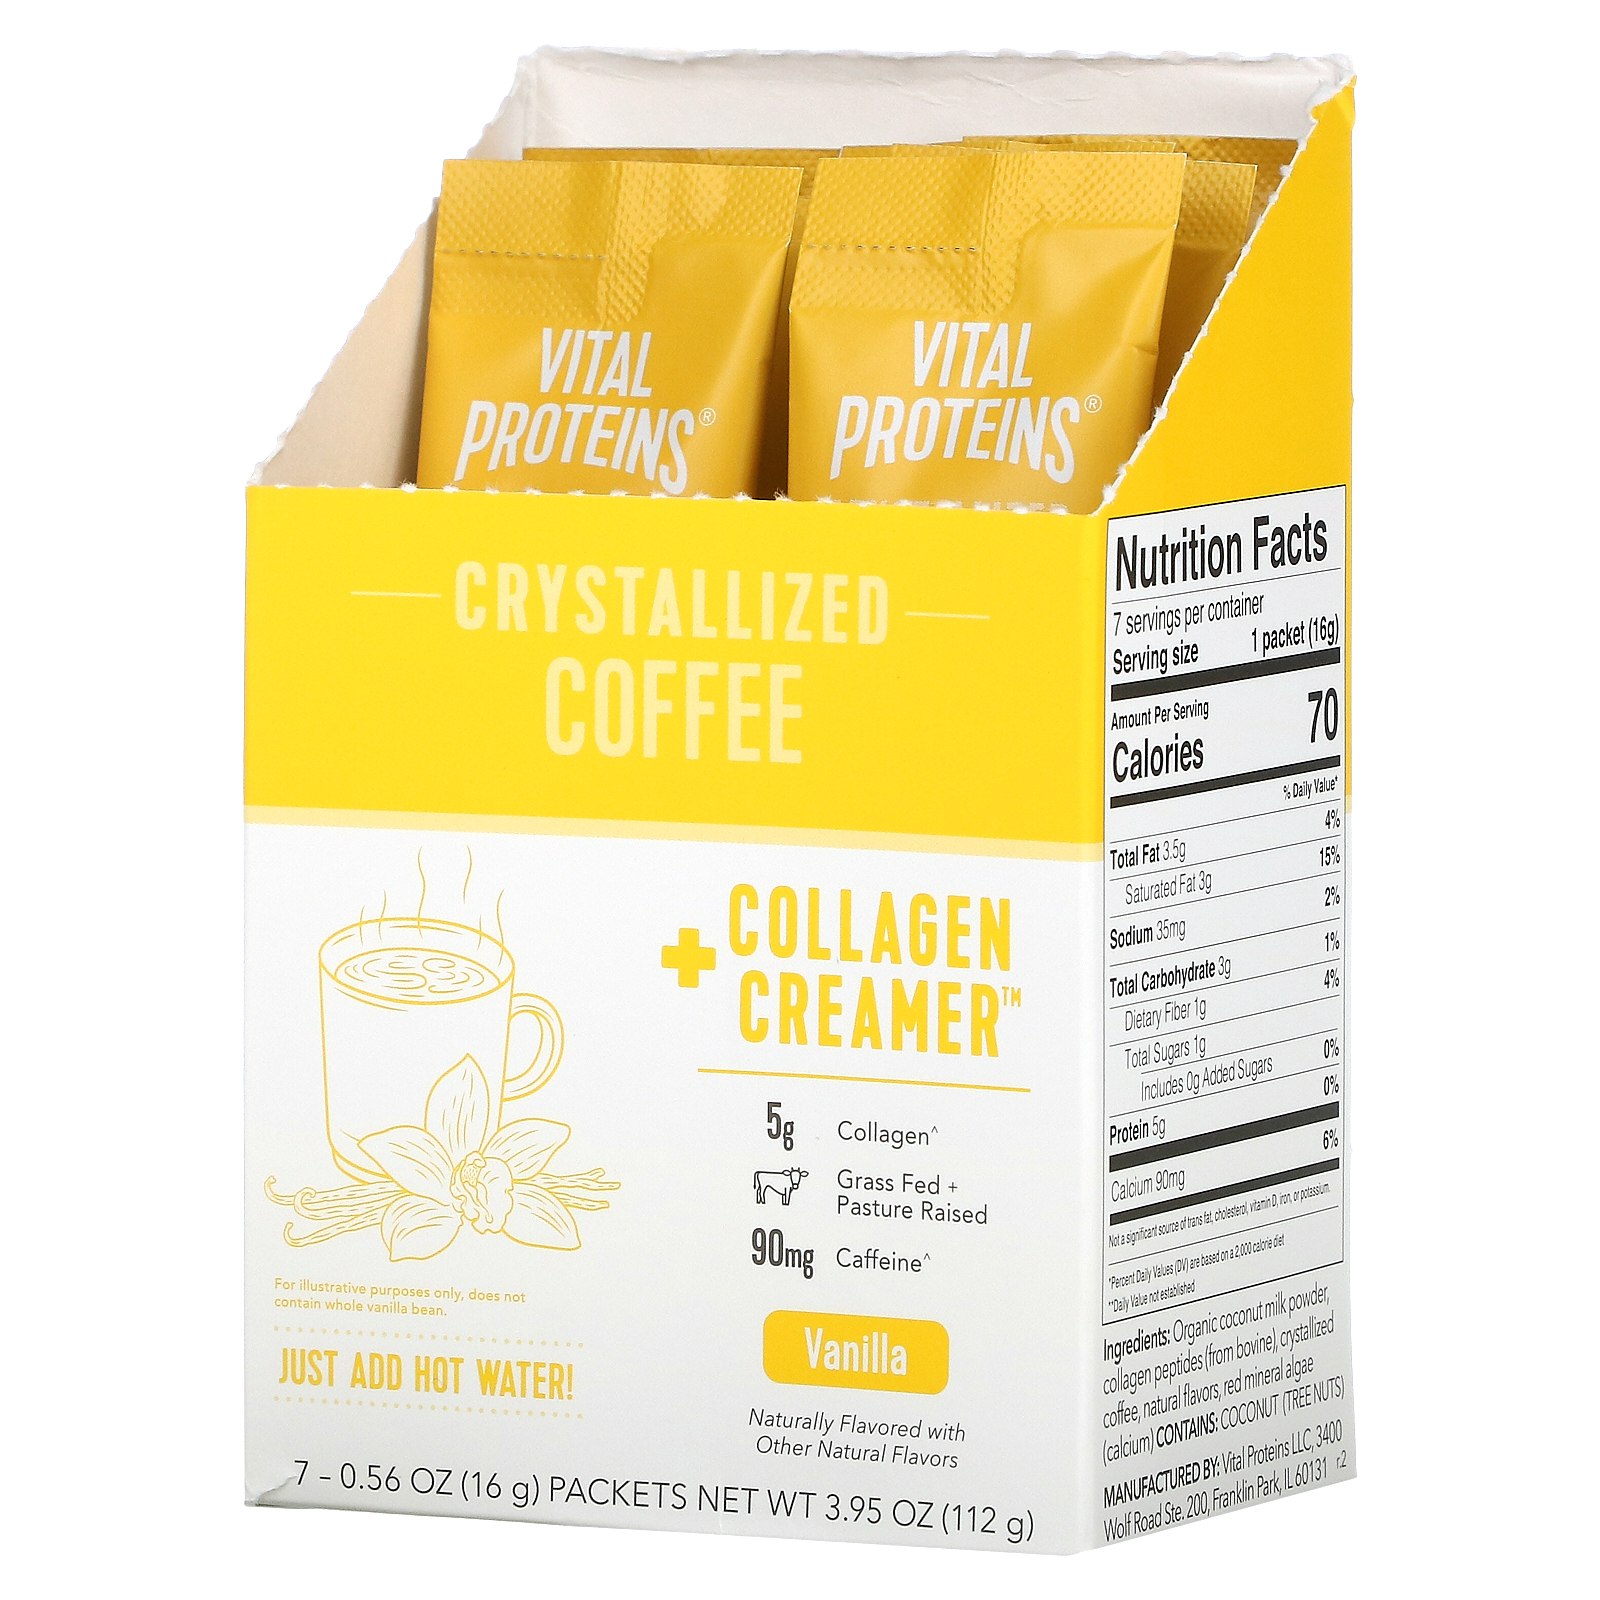 Vital Proteins Crystallized Coffee + Collagen Creamer Vanilla 最高 7 【国内発送】 Each 0.56 Packets oz g 16